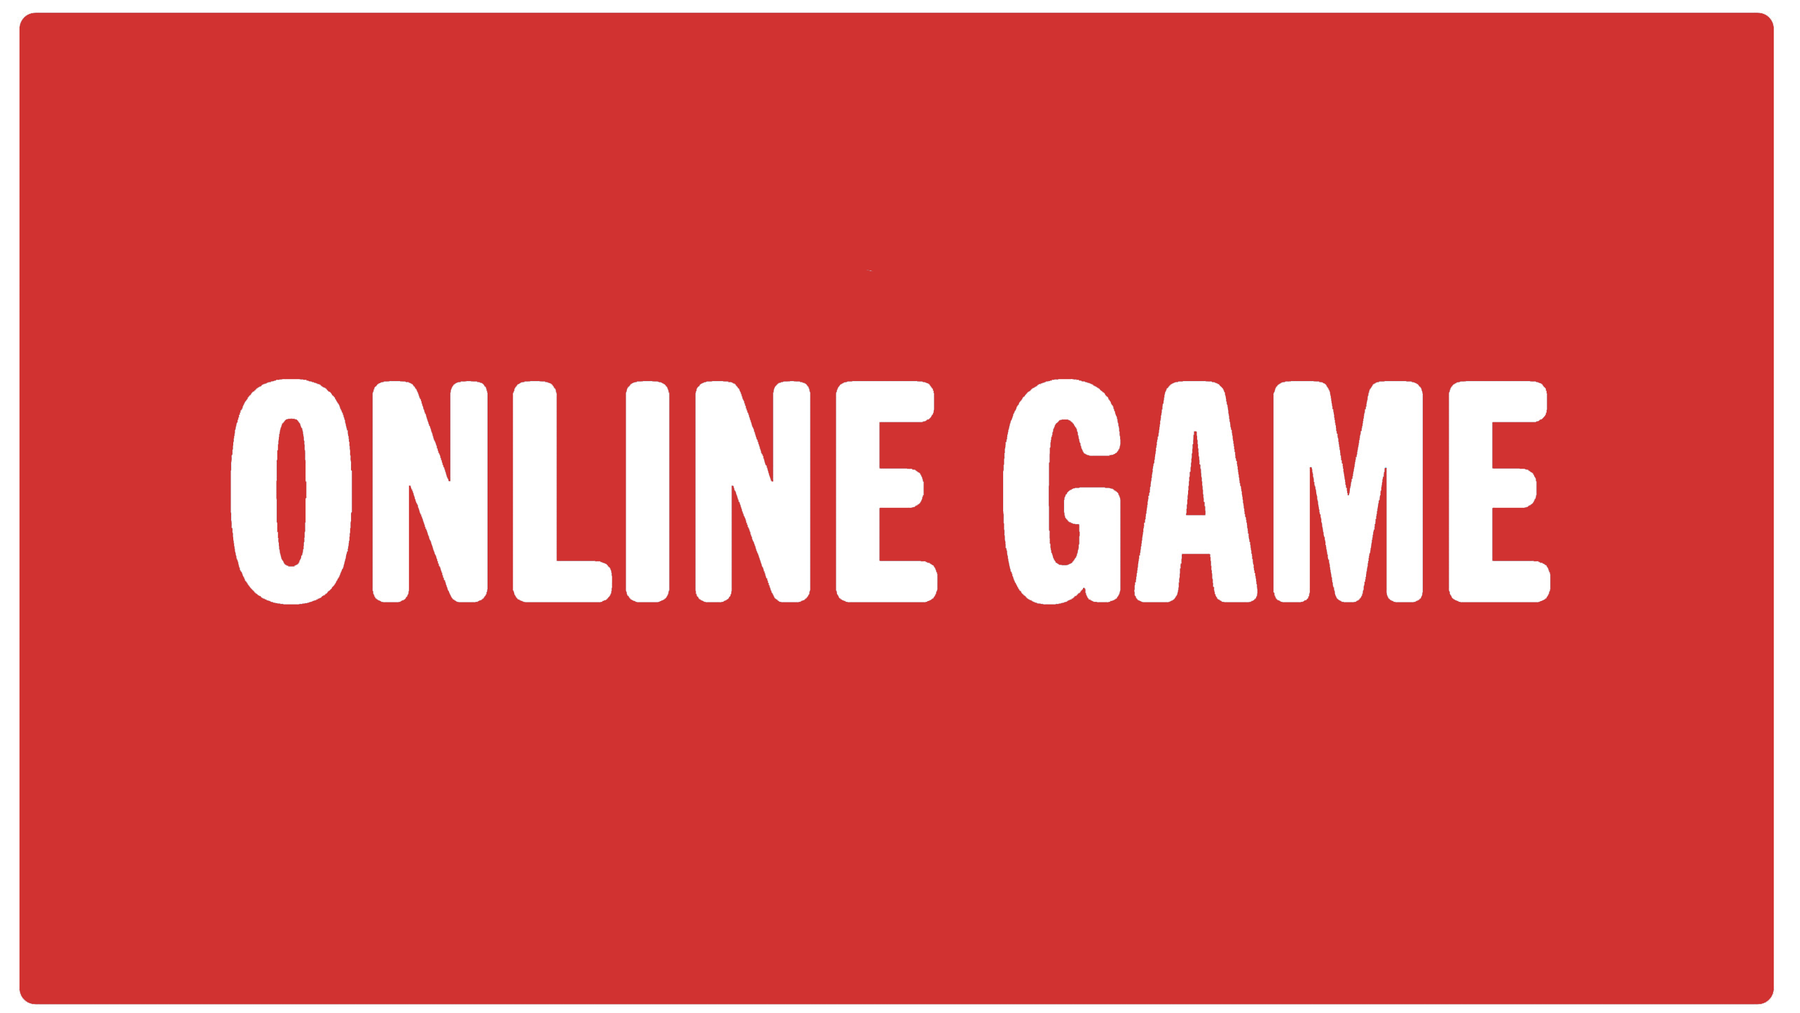 Onlinegame